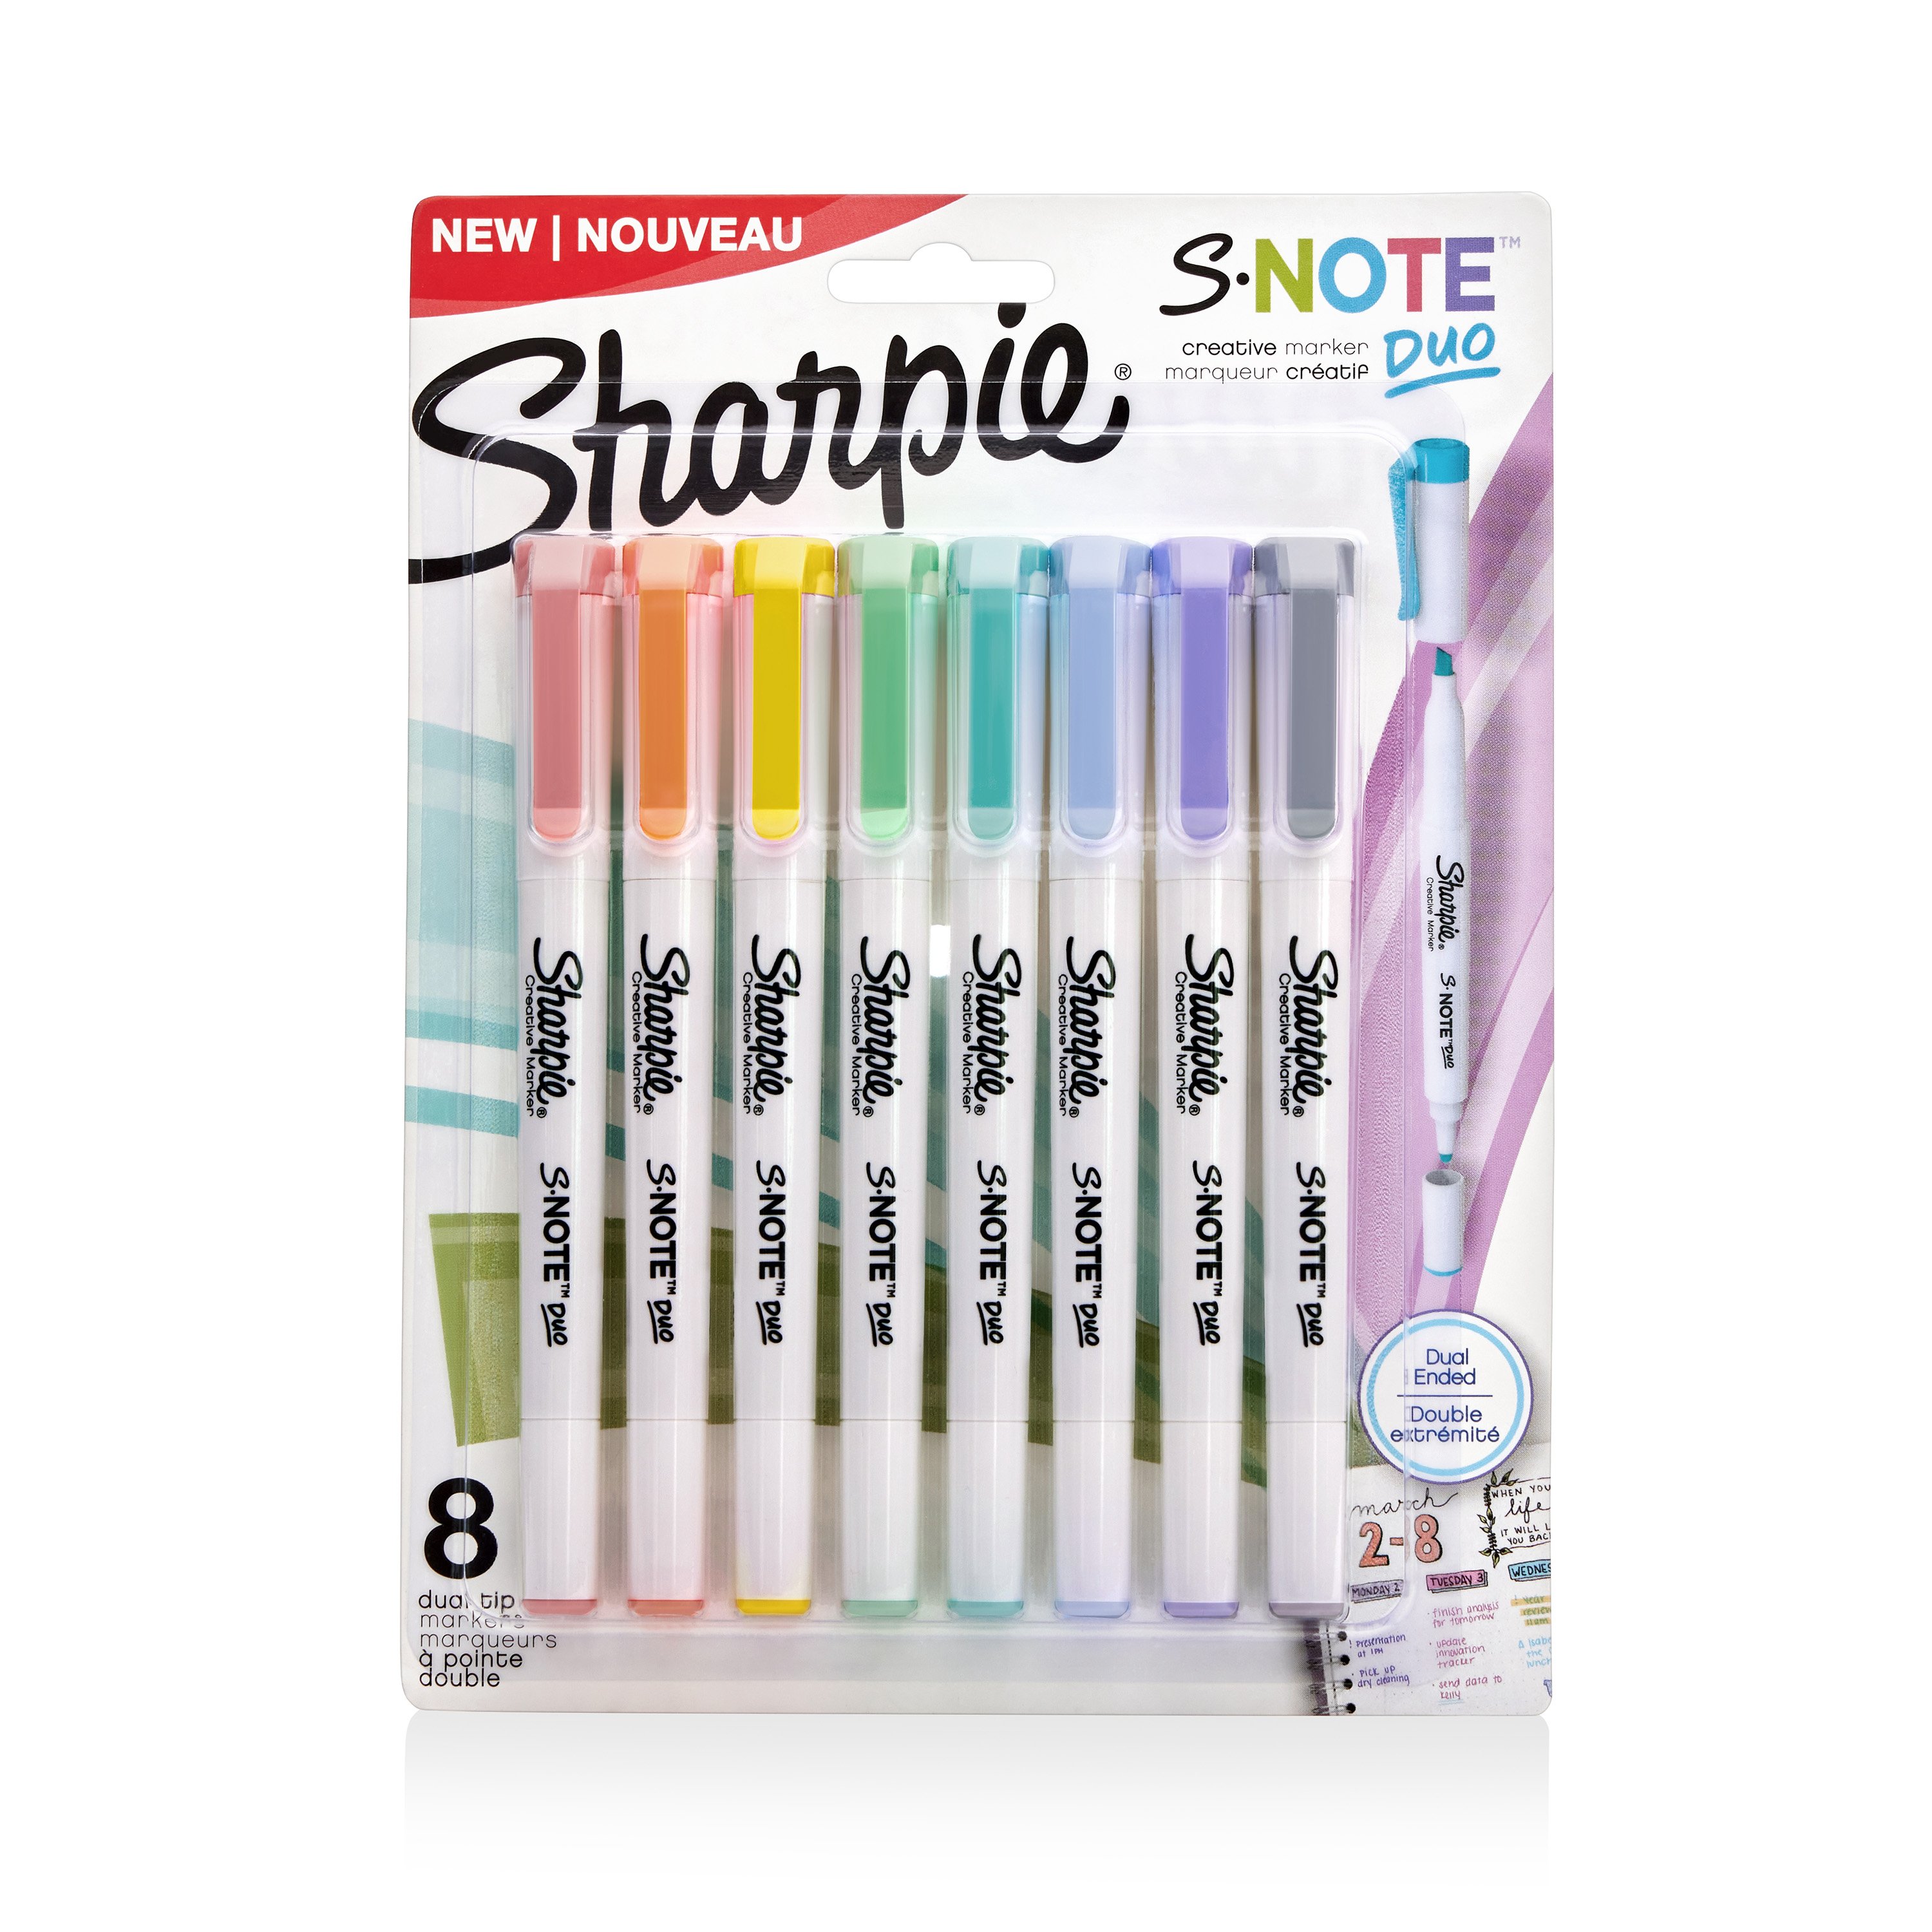 Sharpie Marker Pen  21 Ways to Use a Sharpie Marker at Ryman